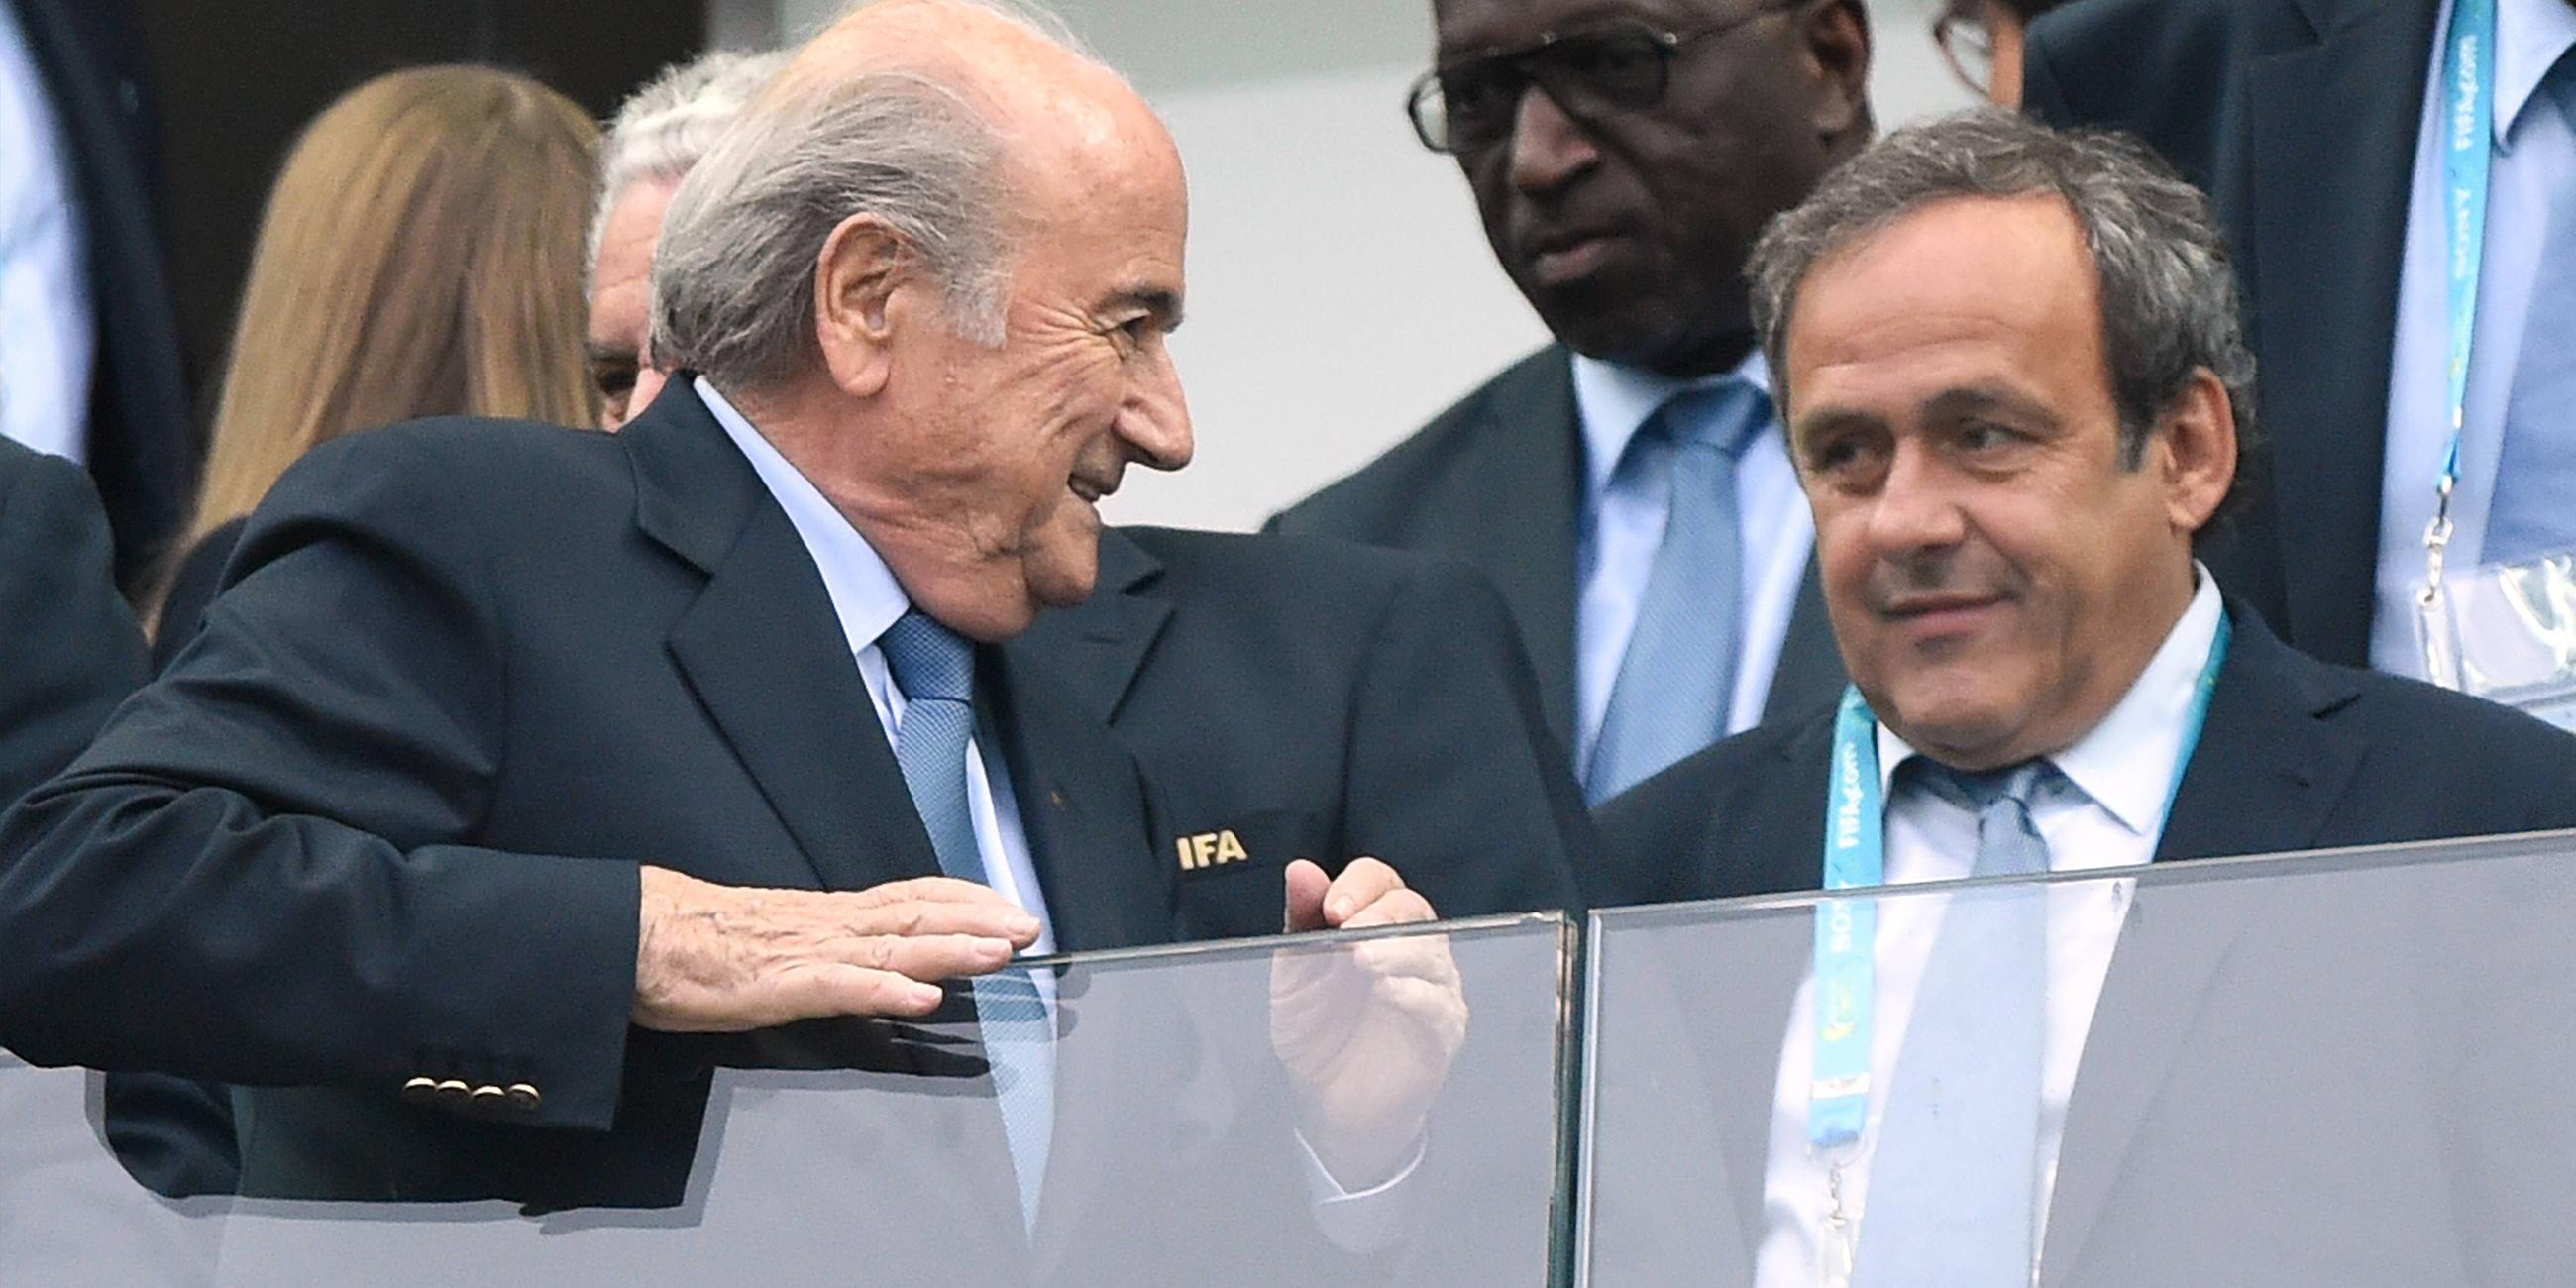 Archiv: FIFA Präsident Joseph Sepp Blatter (SUI) mit Uefa Präsident Michel Platini (FRA) auf der Ehrentribüne. 